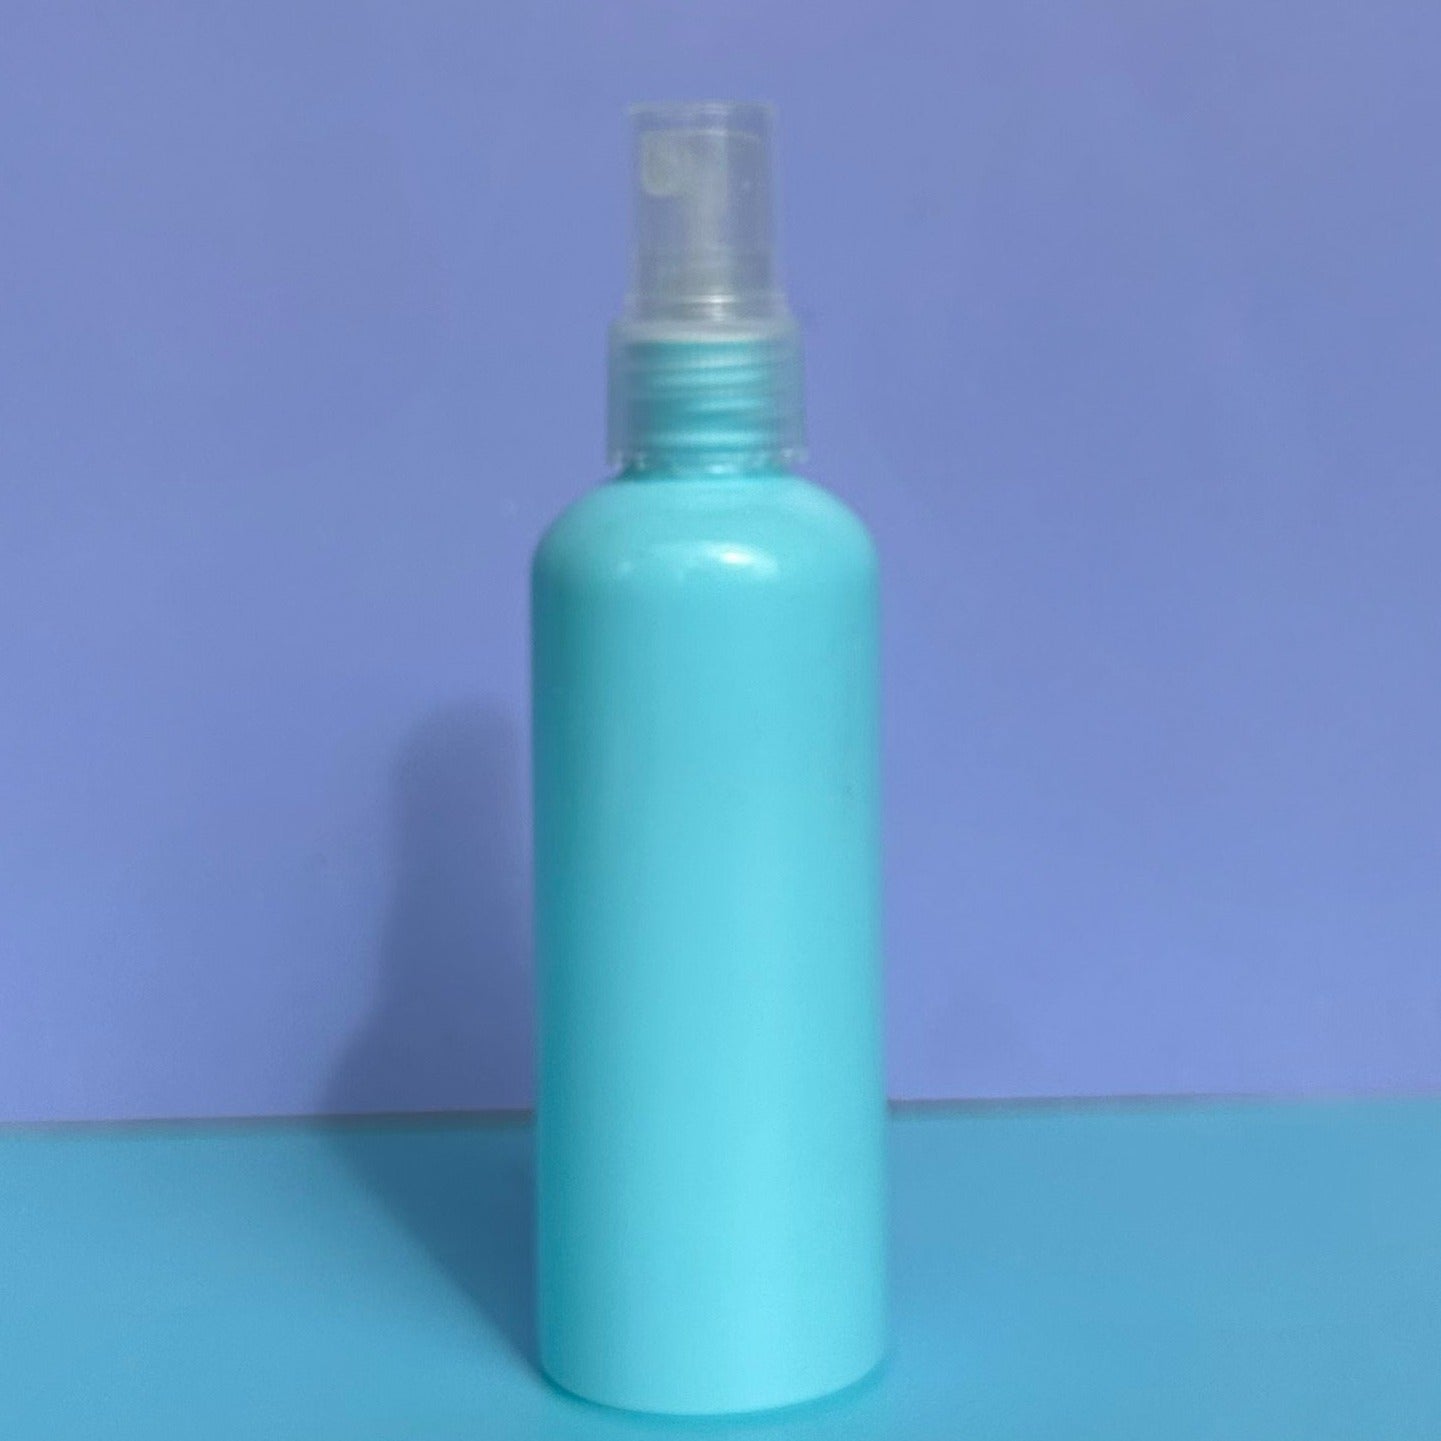 Spray bottle - 100mls